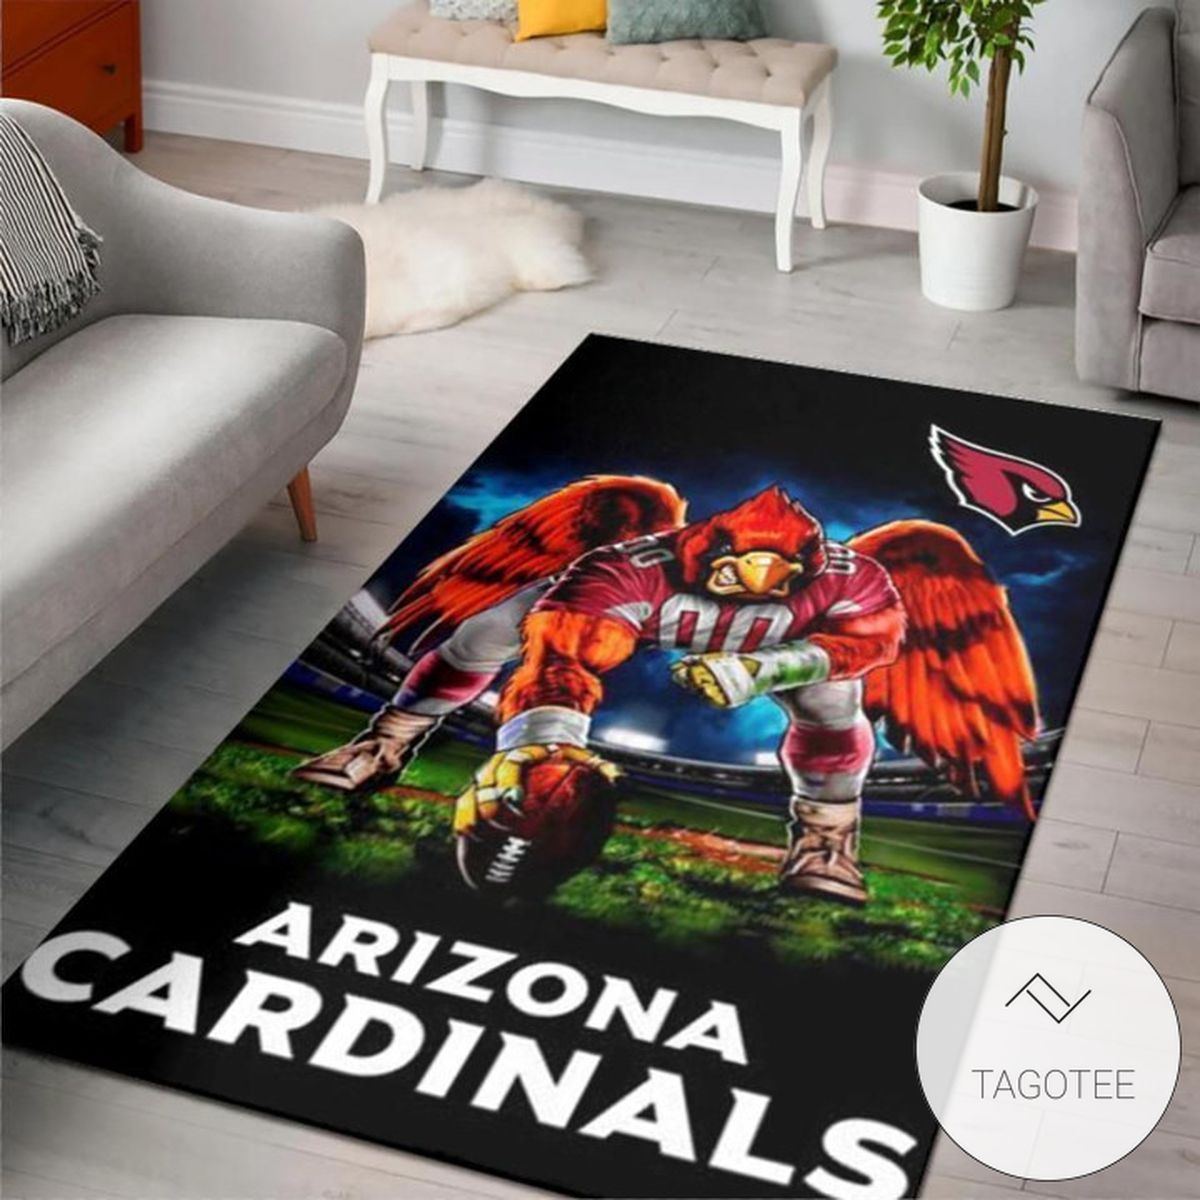 Arizona Cardinals Ferocious Football Nfl Area Rug Rugs For Living Room Rug Home Decor